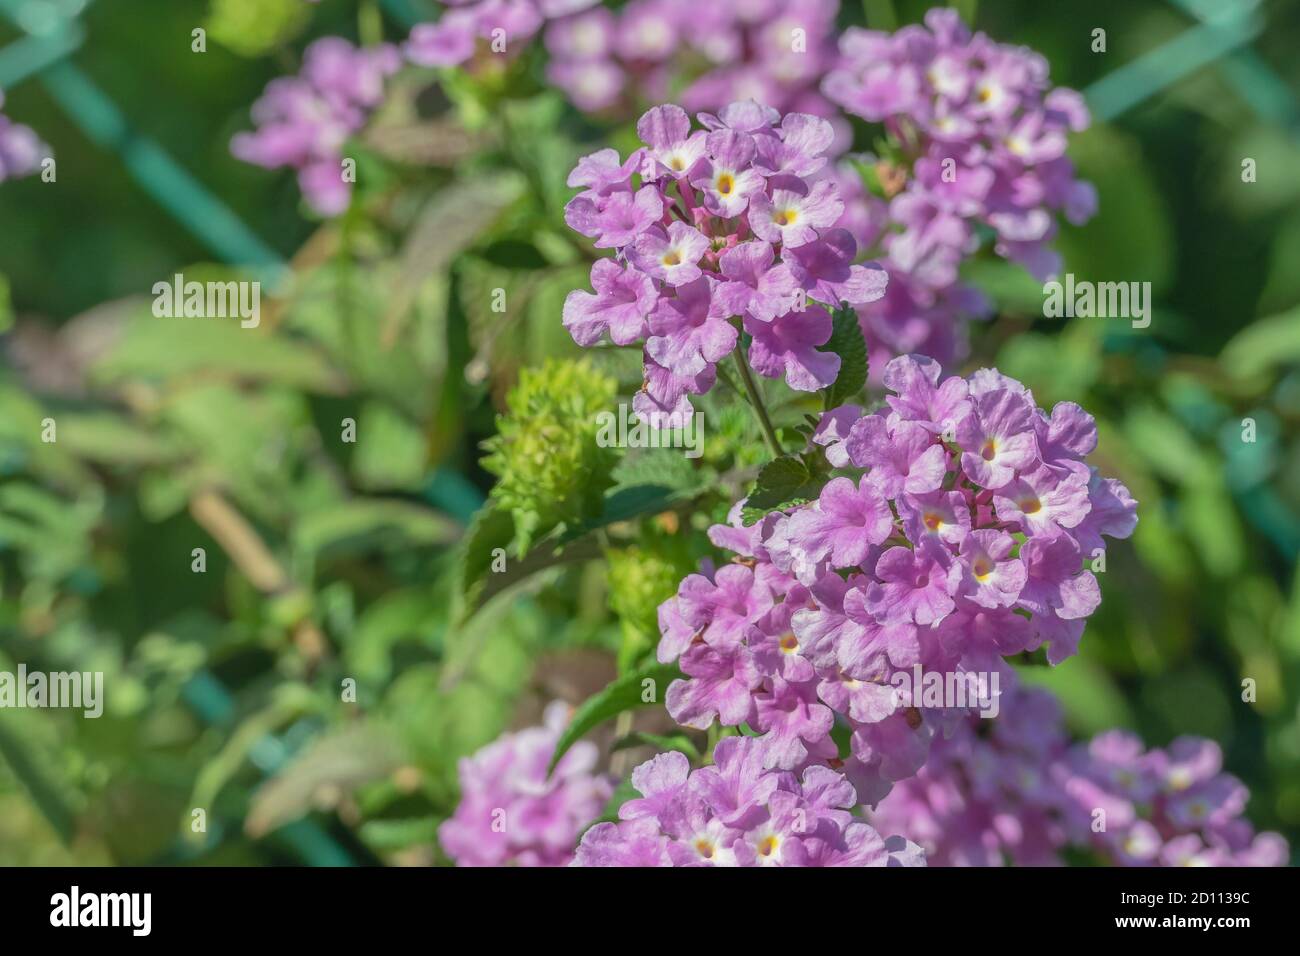 pink flowers of lantana camara plant outdoors and sunlight close up view Stock Photo